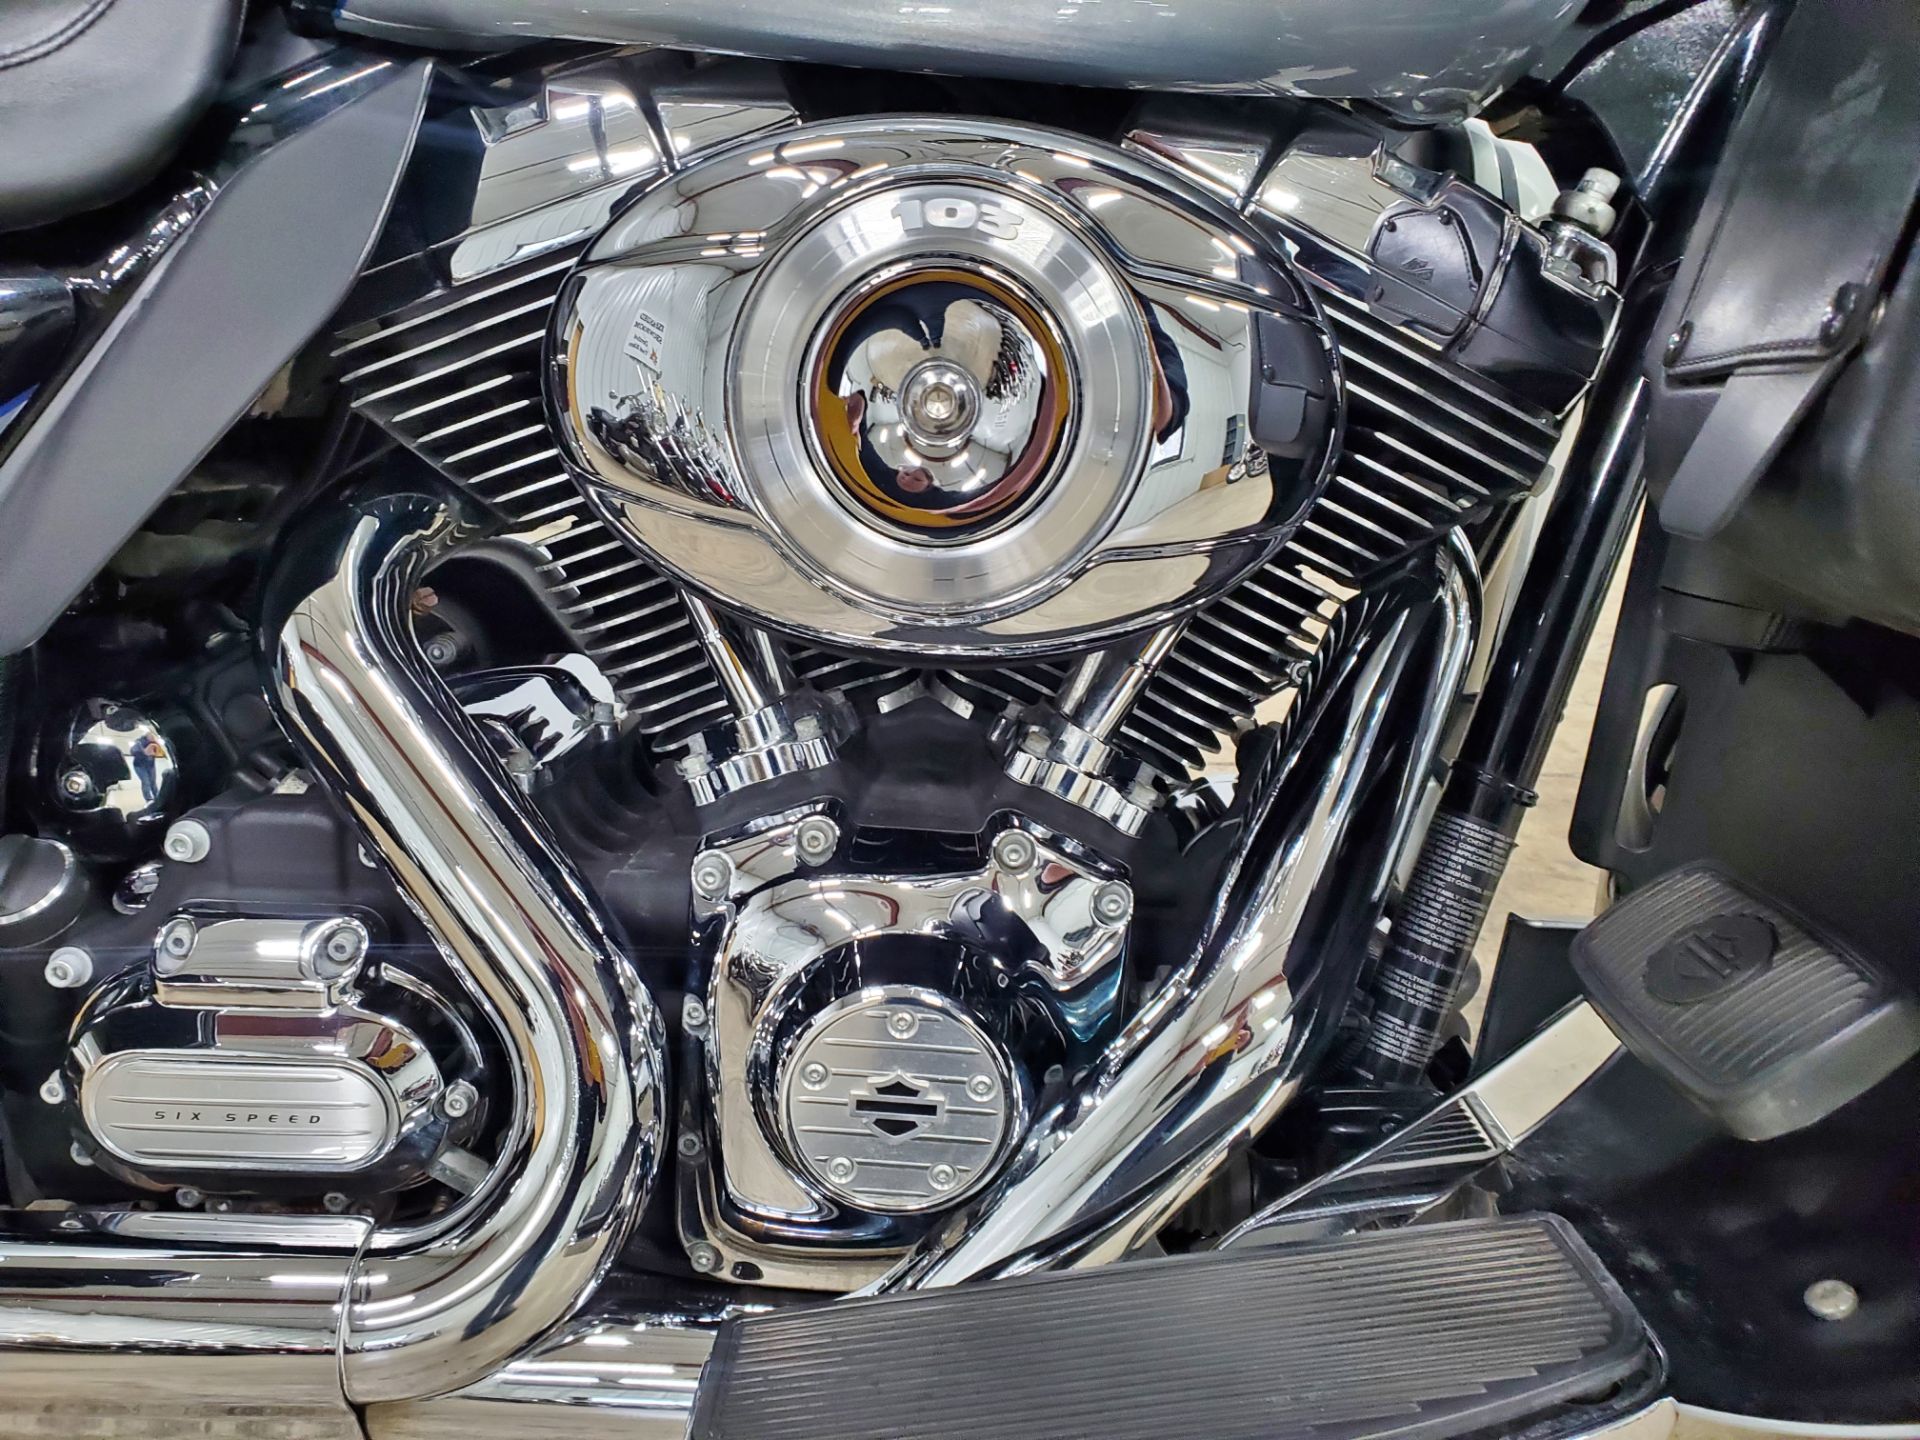 2012 Harley-Davidson Electra Glide® Ultra Limited in Sandusky, Ohio - Photo 2